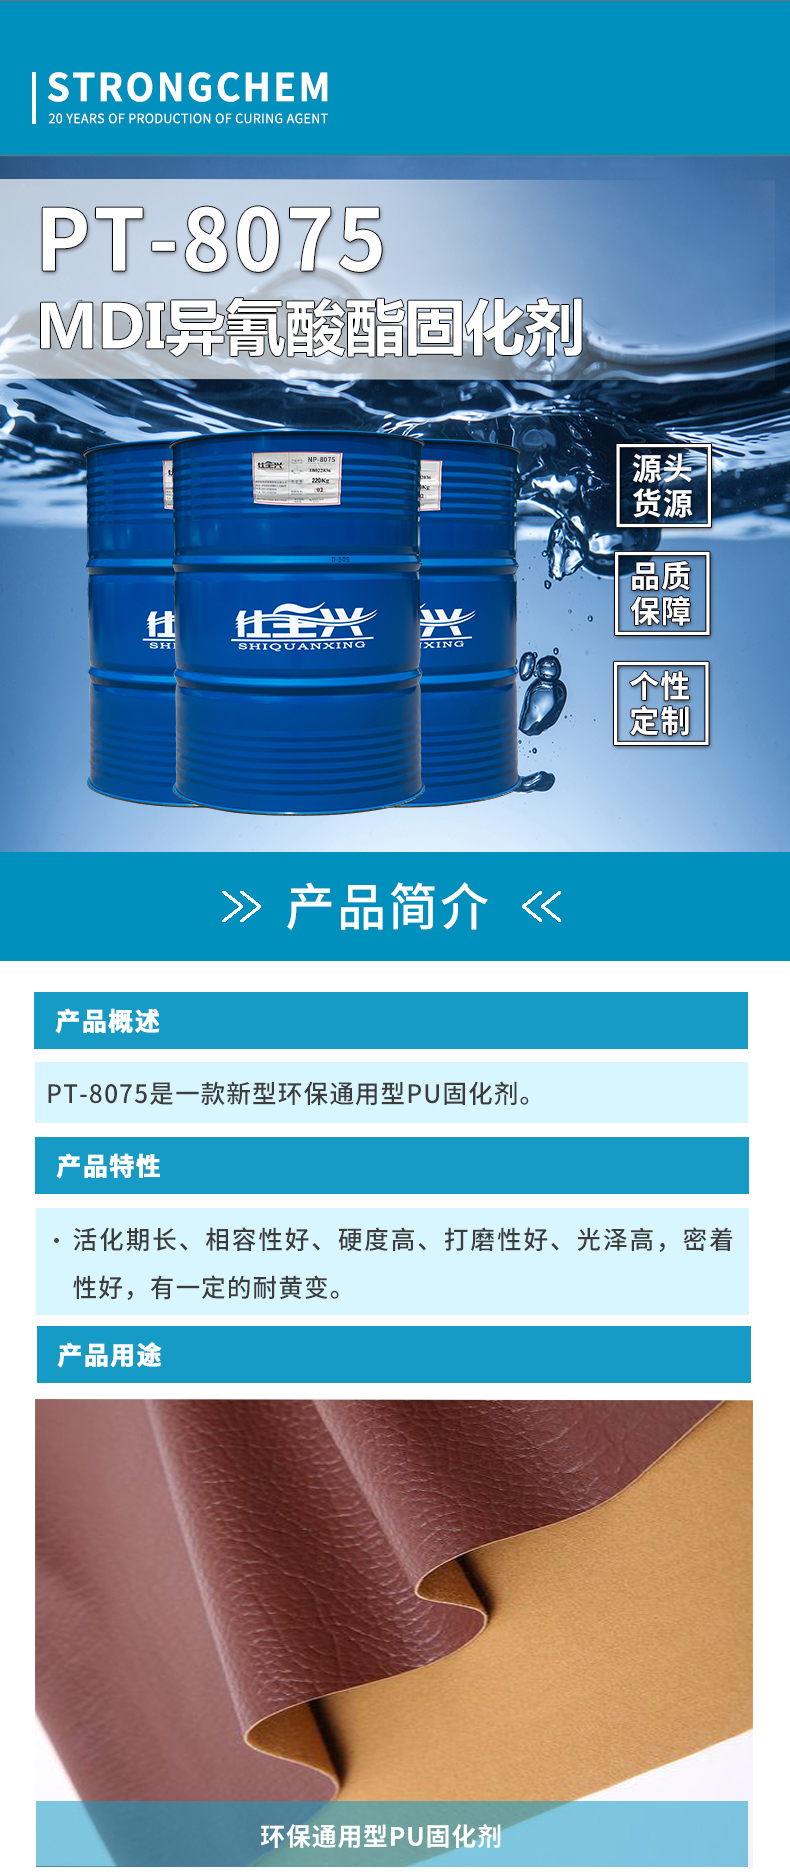 PT-8075 MDI异氰酸酯固化剂